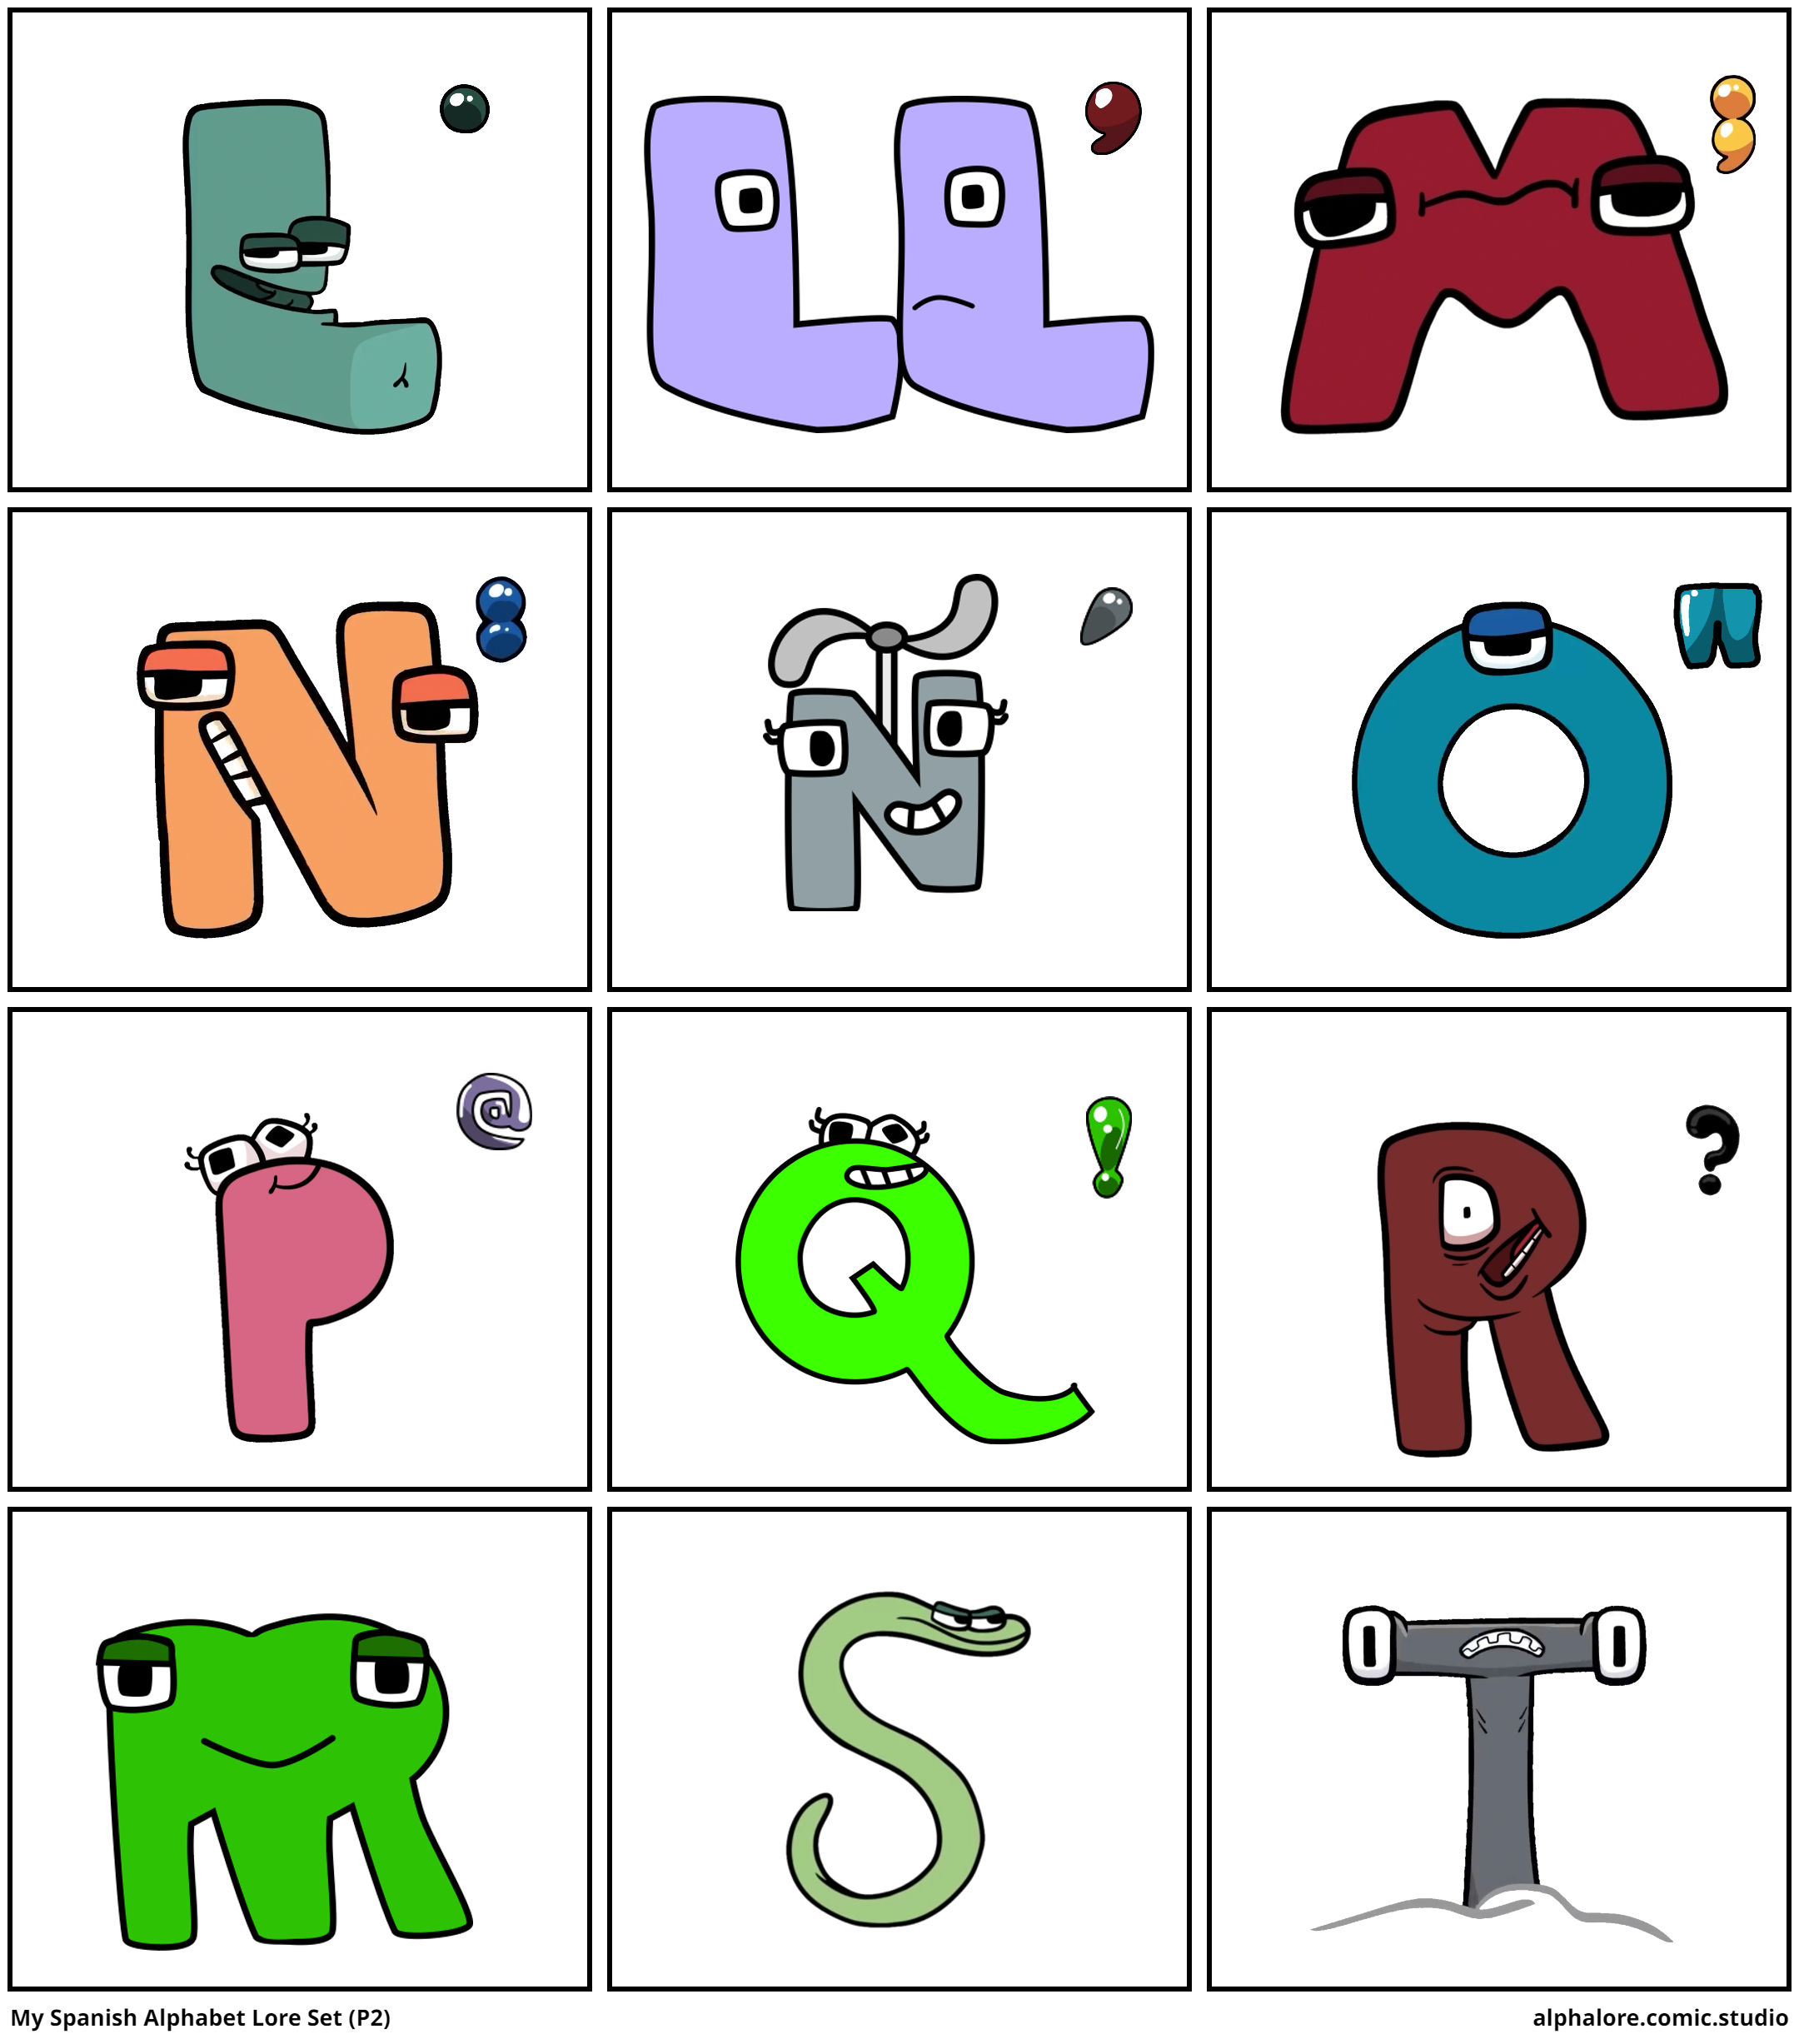 My Spanish Alphabet Lore Set (P2)